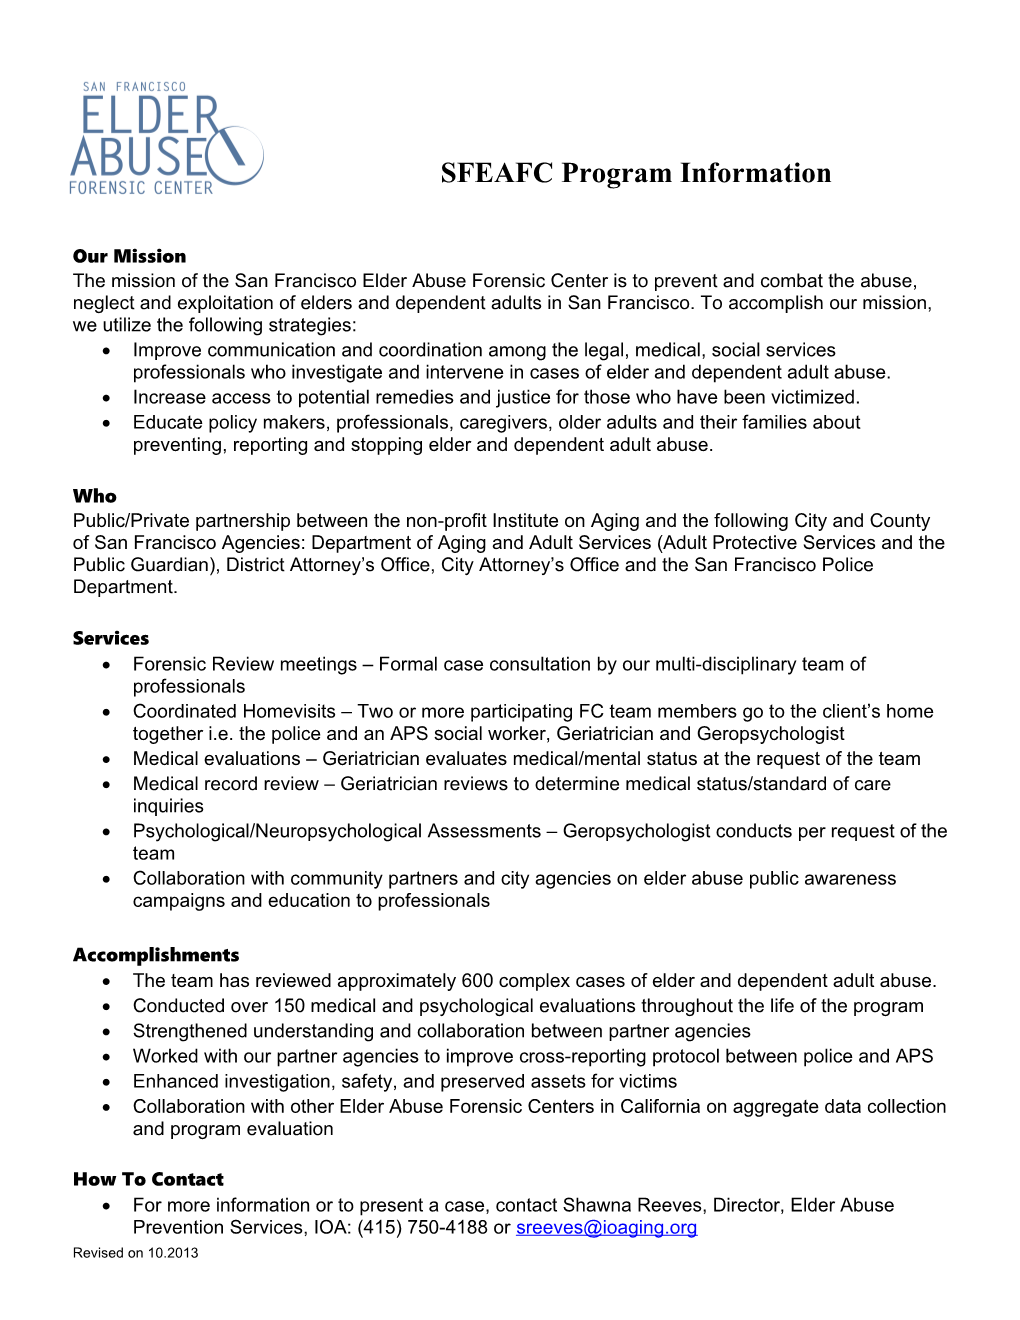 SFEAFC Program Information